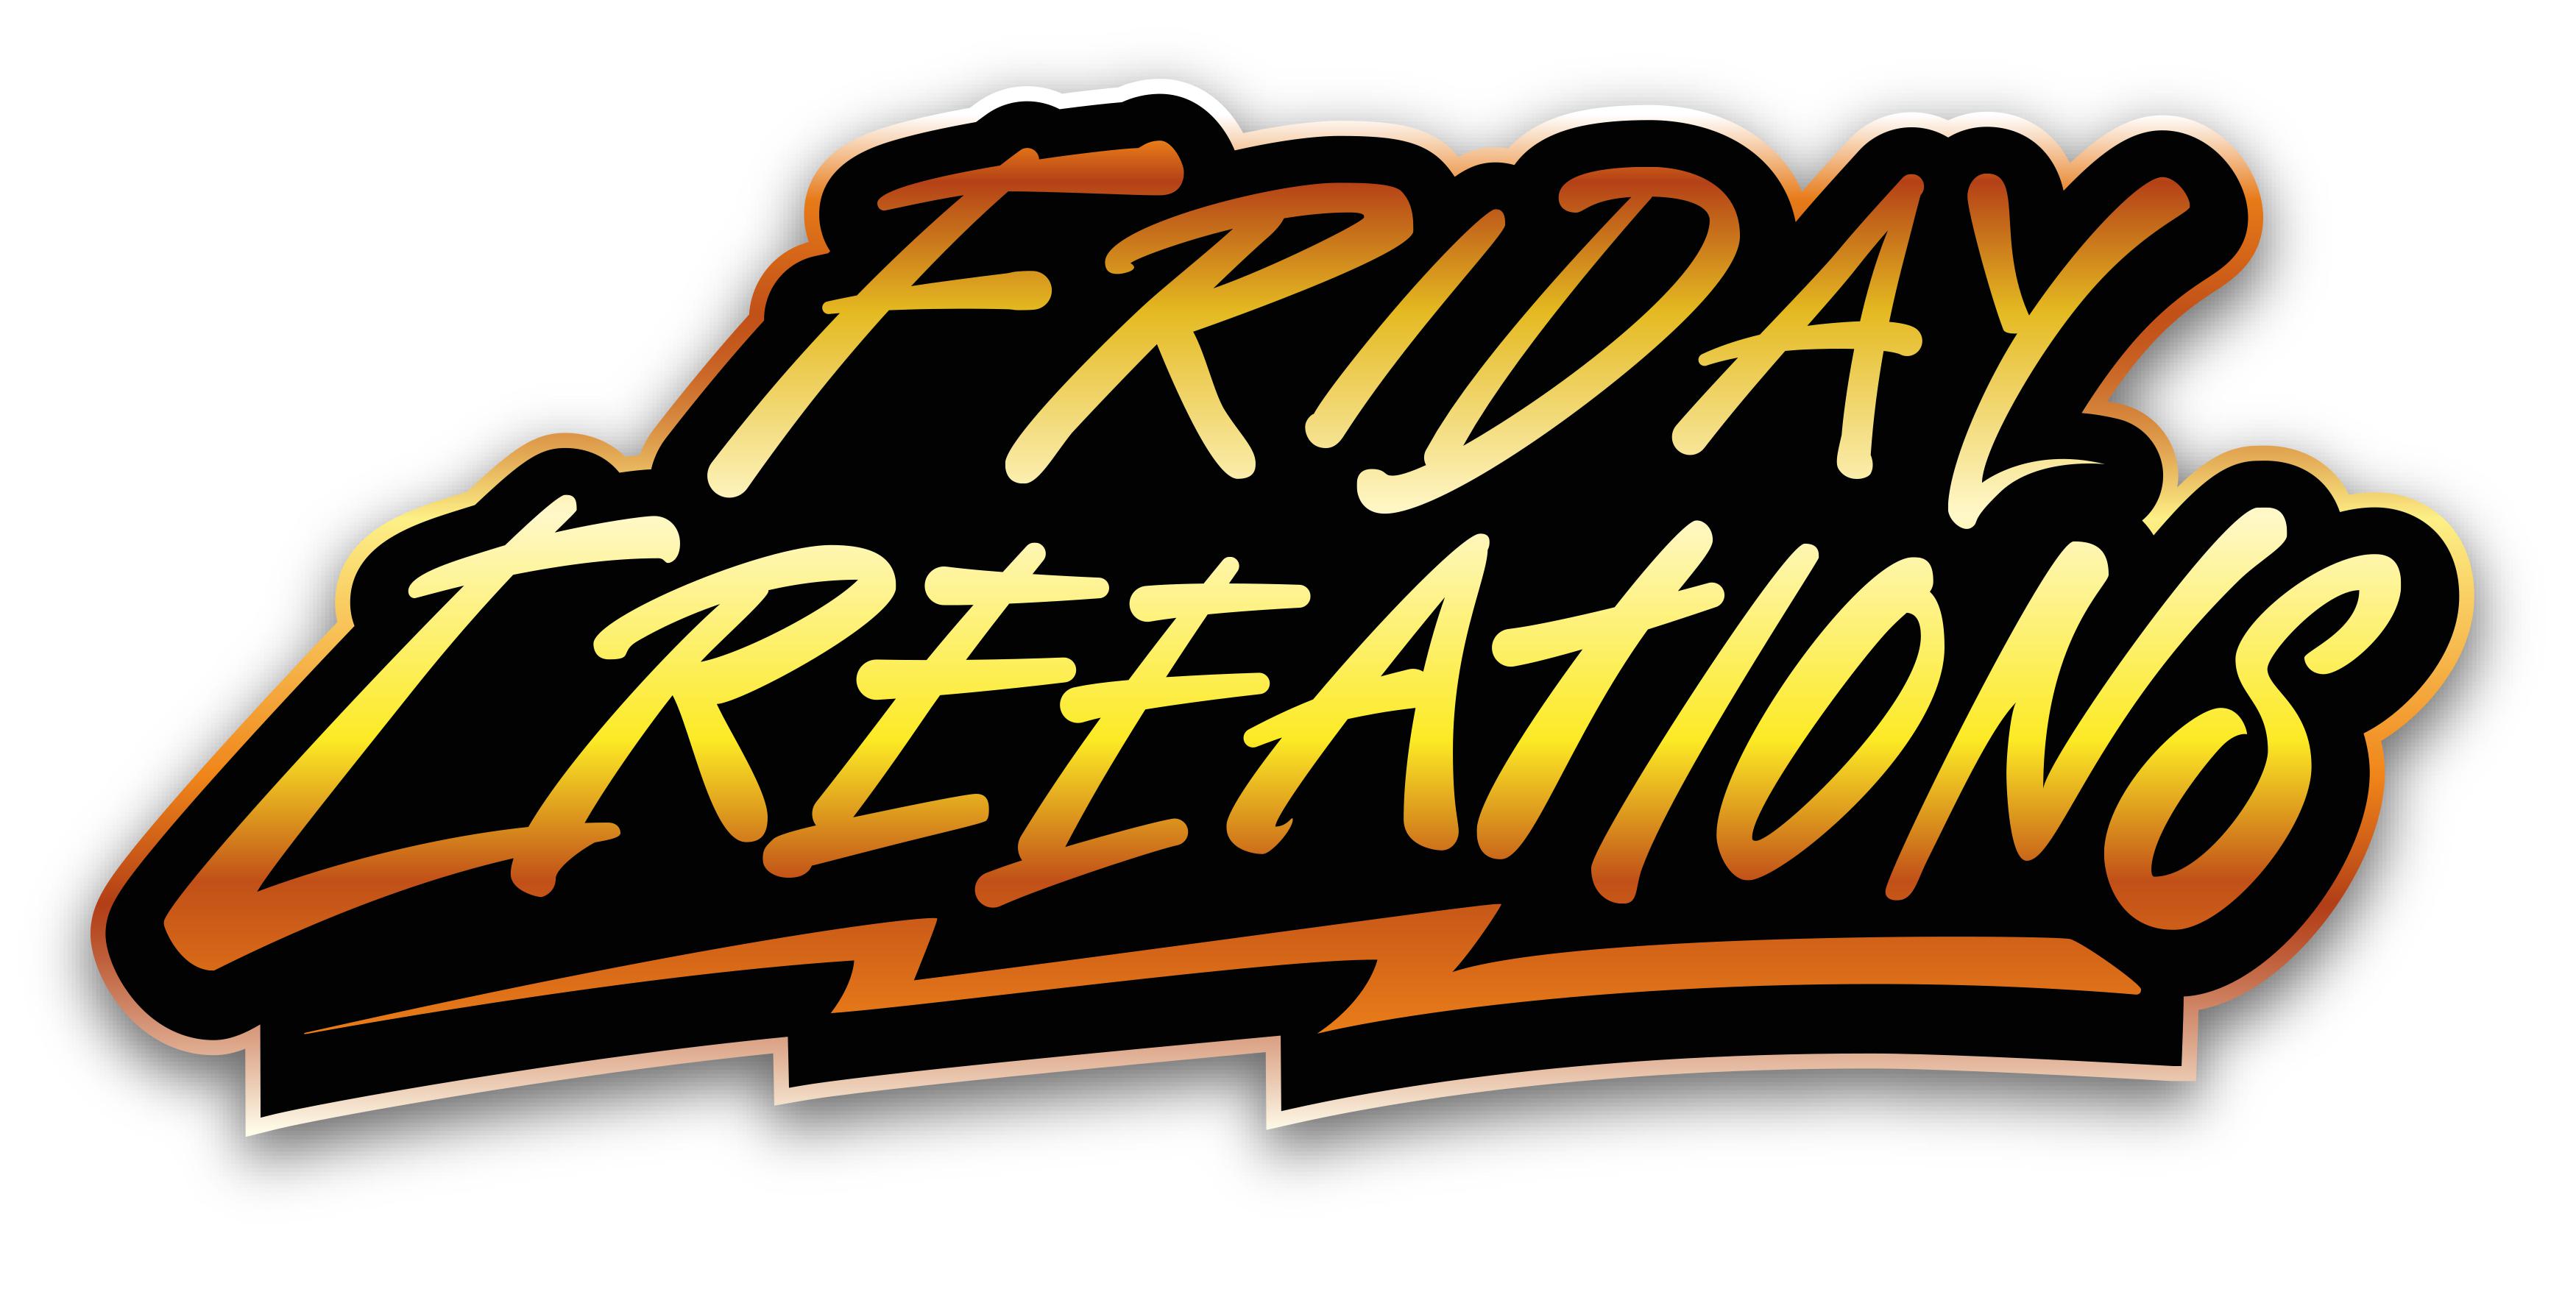 Friday Creeations logo image - yellow and orange 